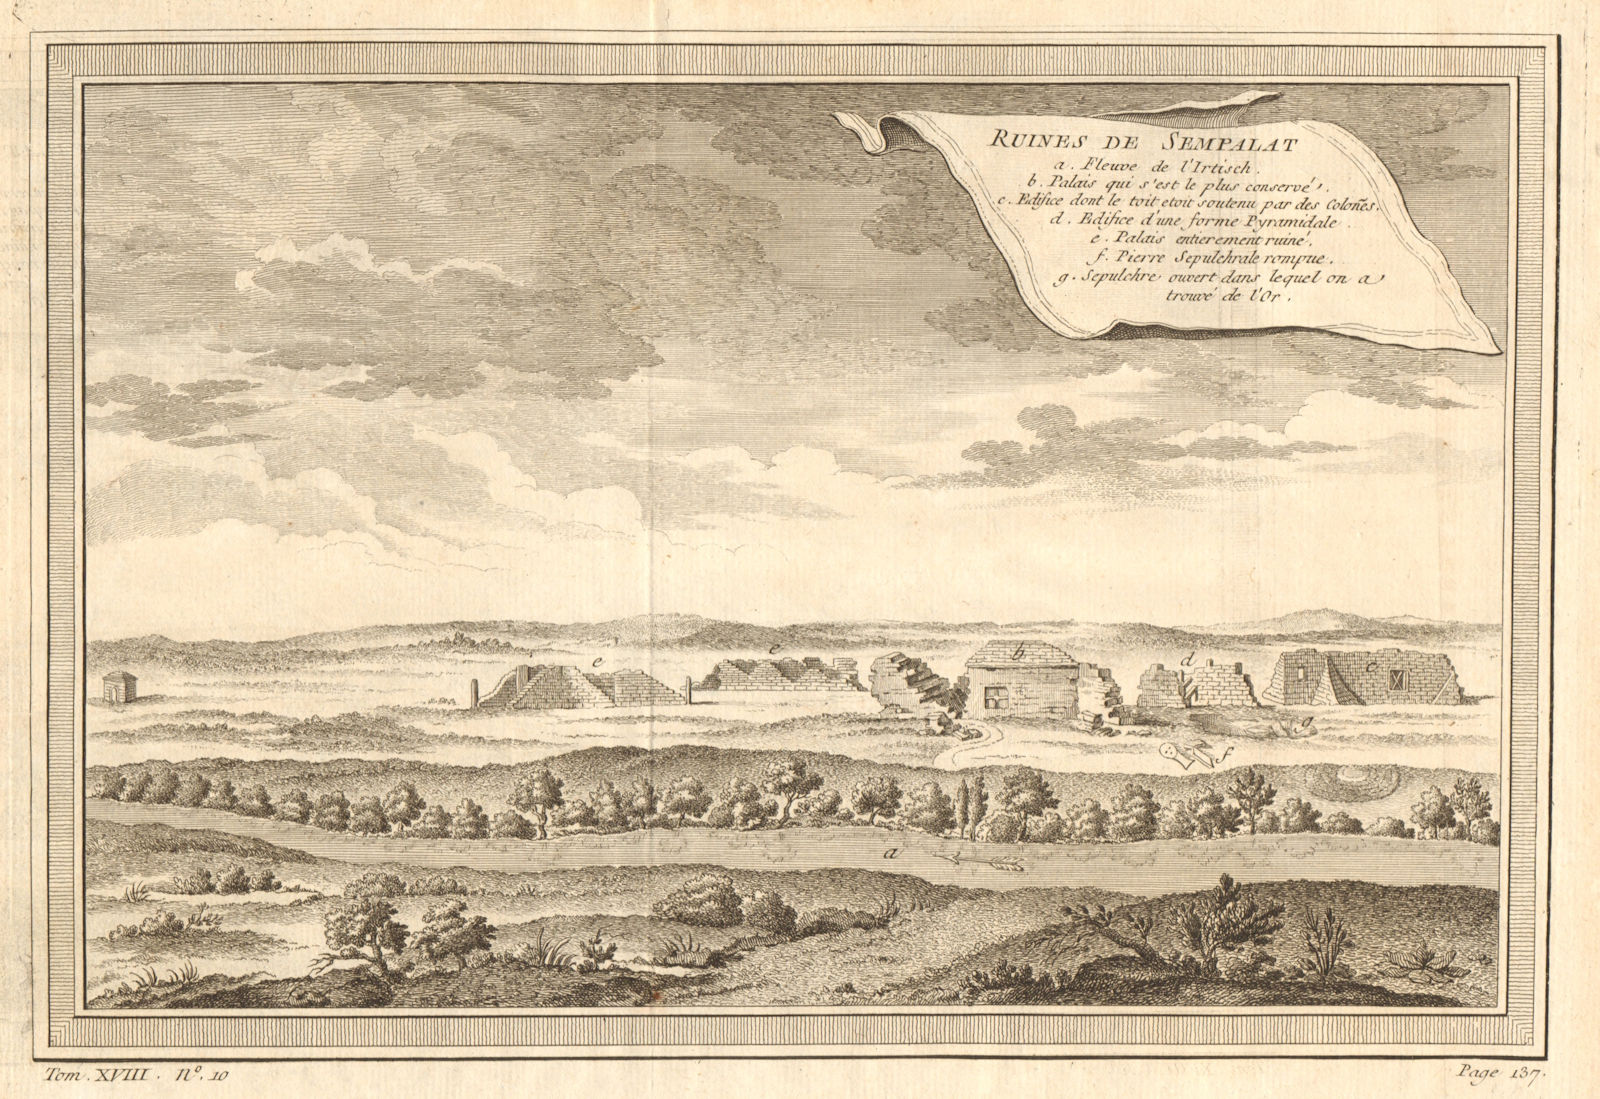 'Ruines de Sempalat'. Sem Palat ruins, now Semipalatinsk/Semey, Kazakhstan 1768